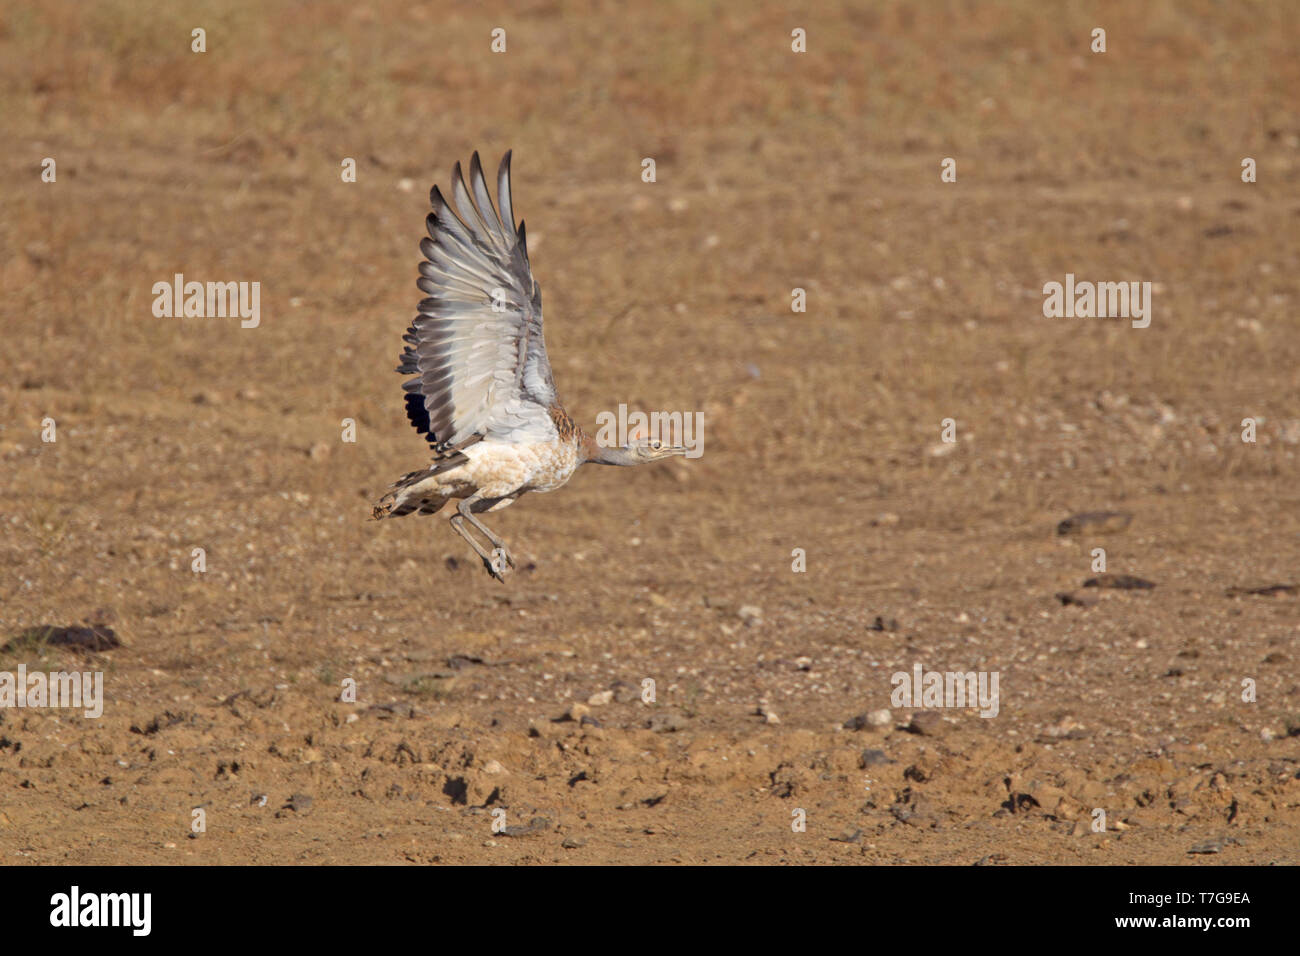 Female Great Bustard (Otis tarda) in flight, showing underwing. Stock Photo